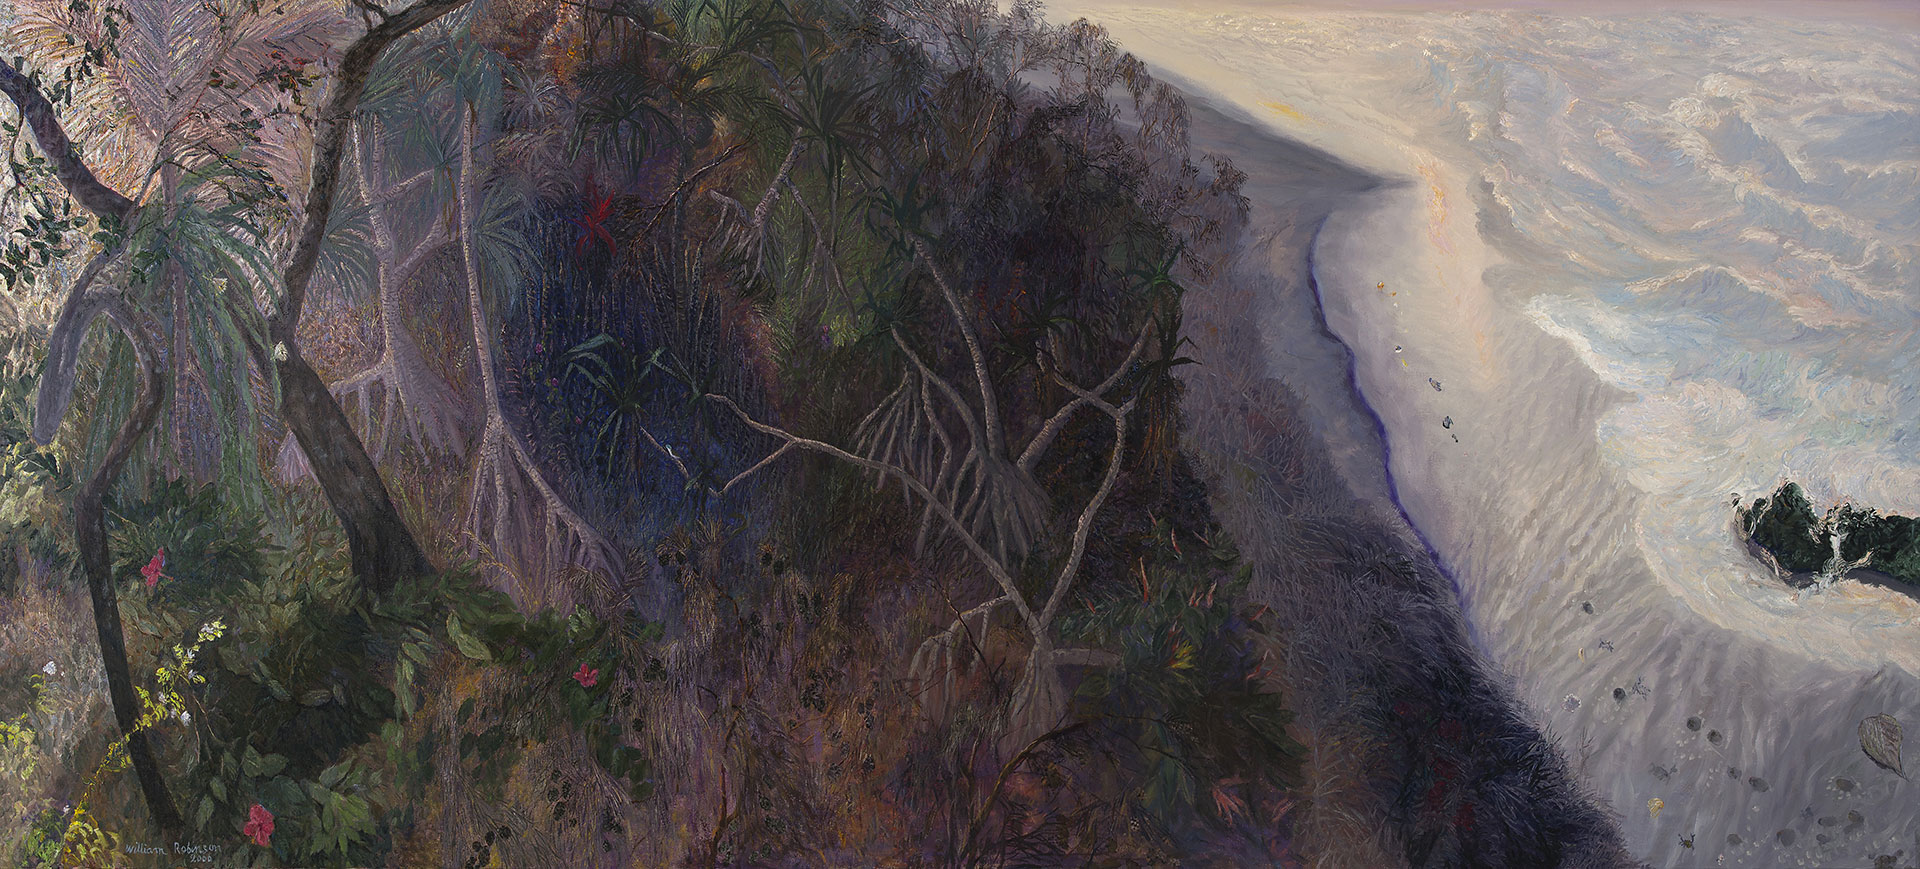 William ROBINSON 'Evening landscape with pandanus' 2006